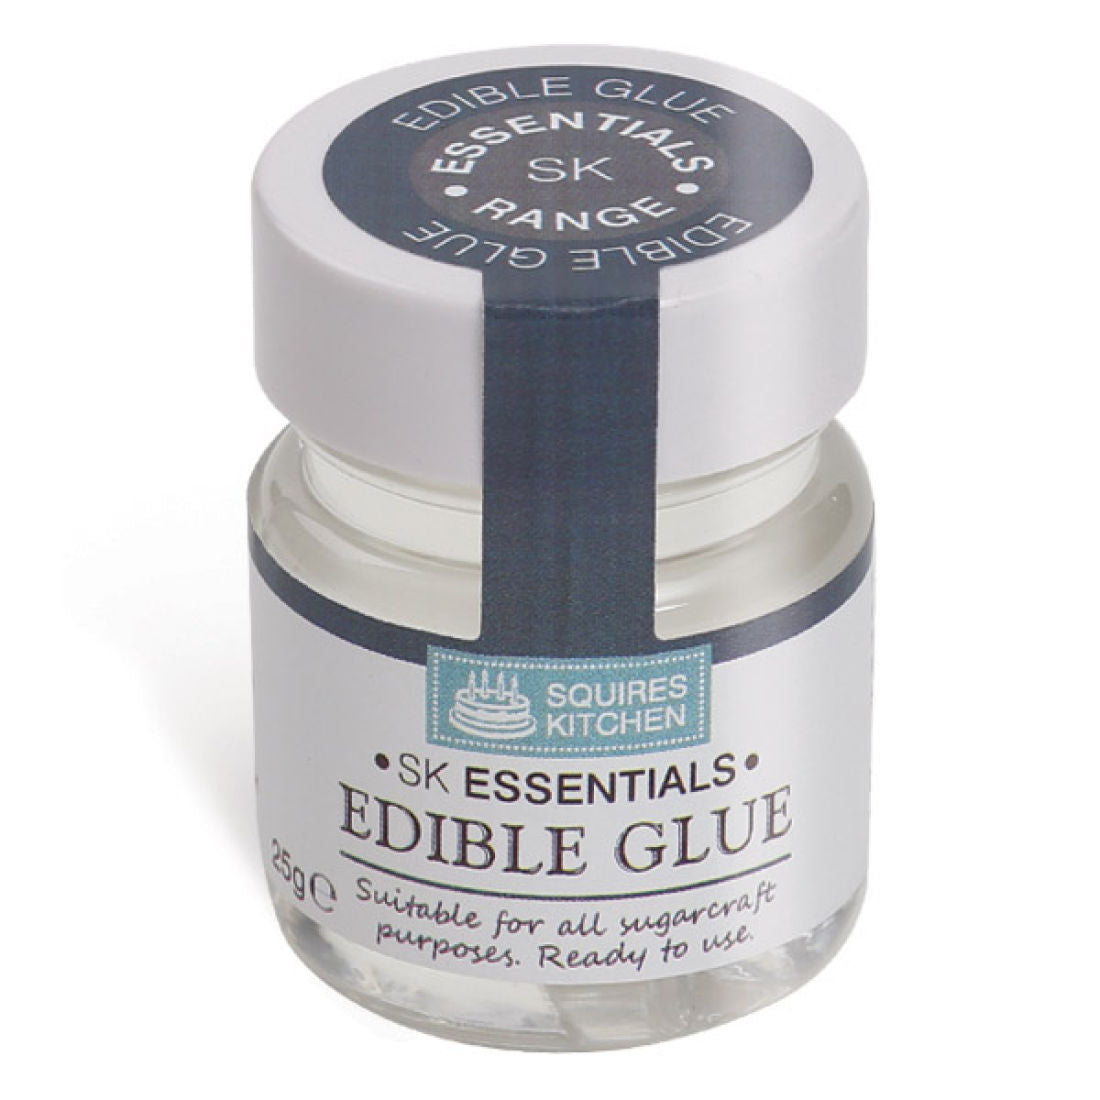 SK Essentials Edible Glue